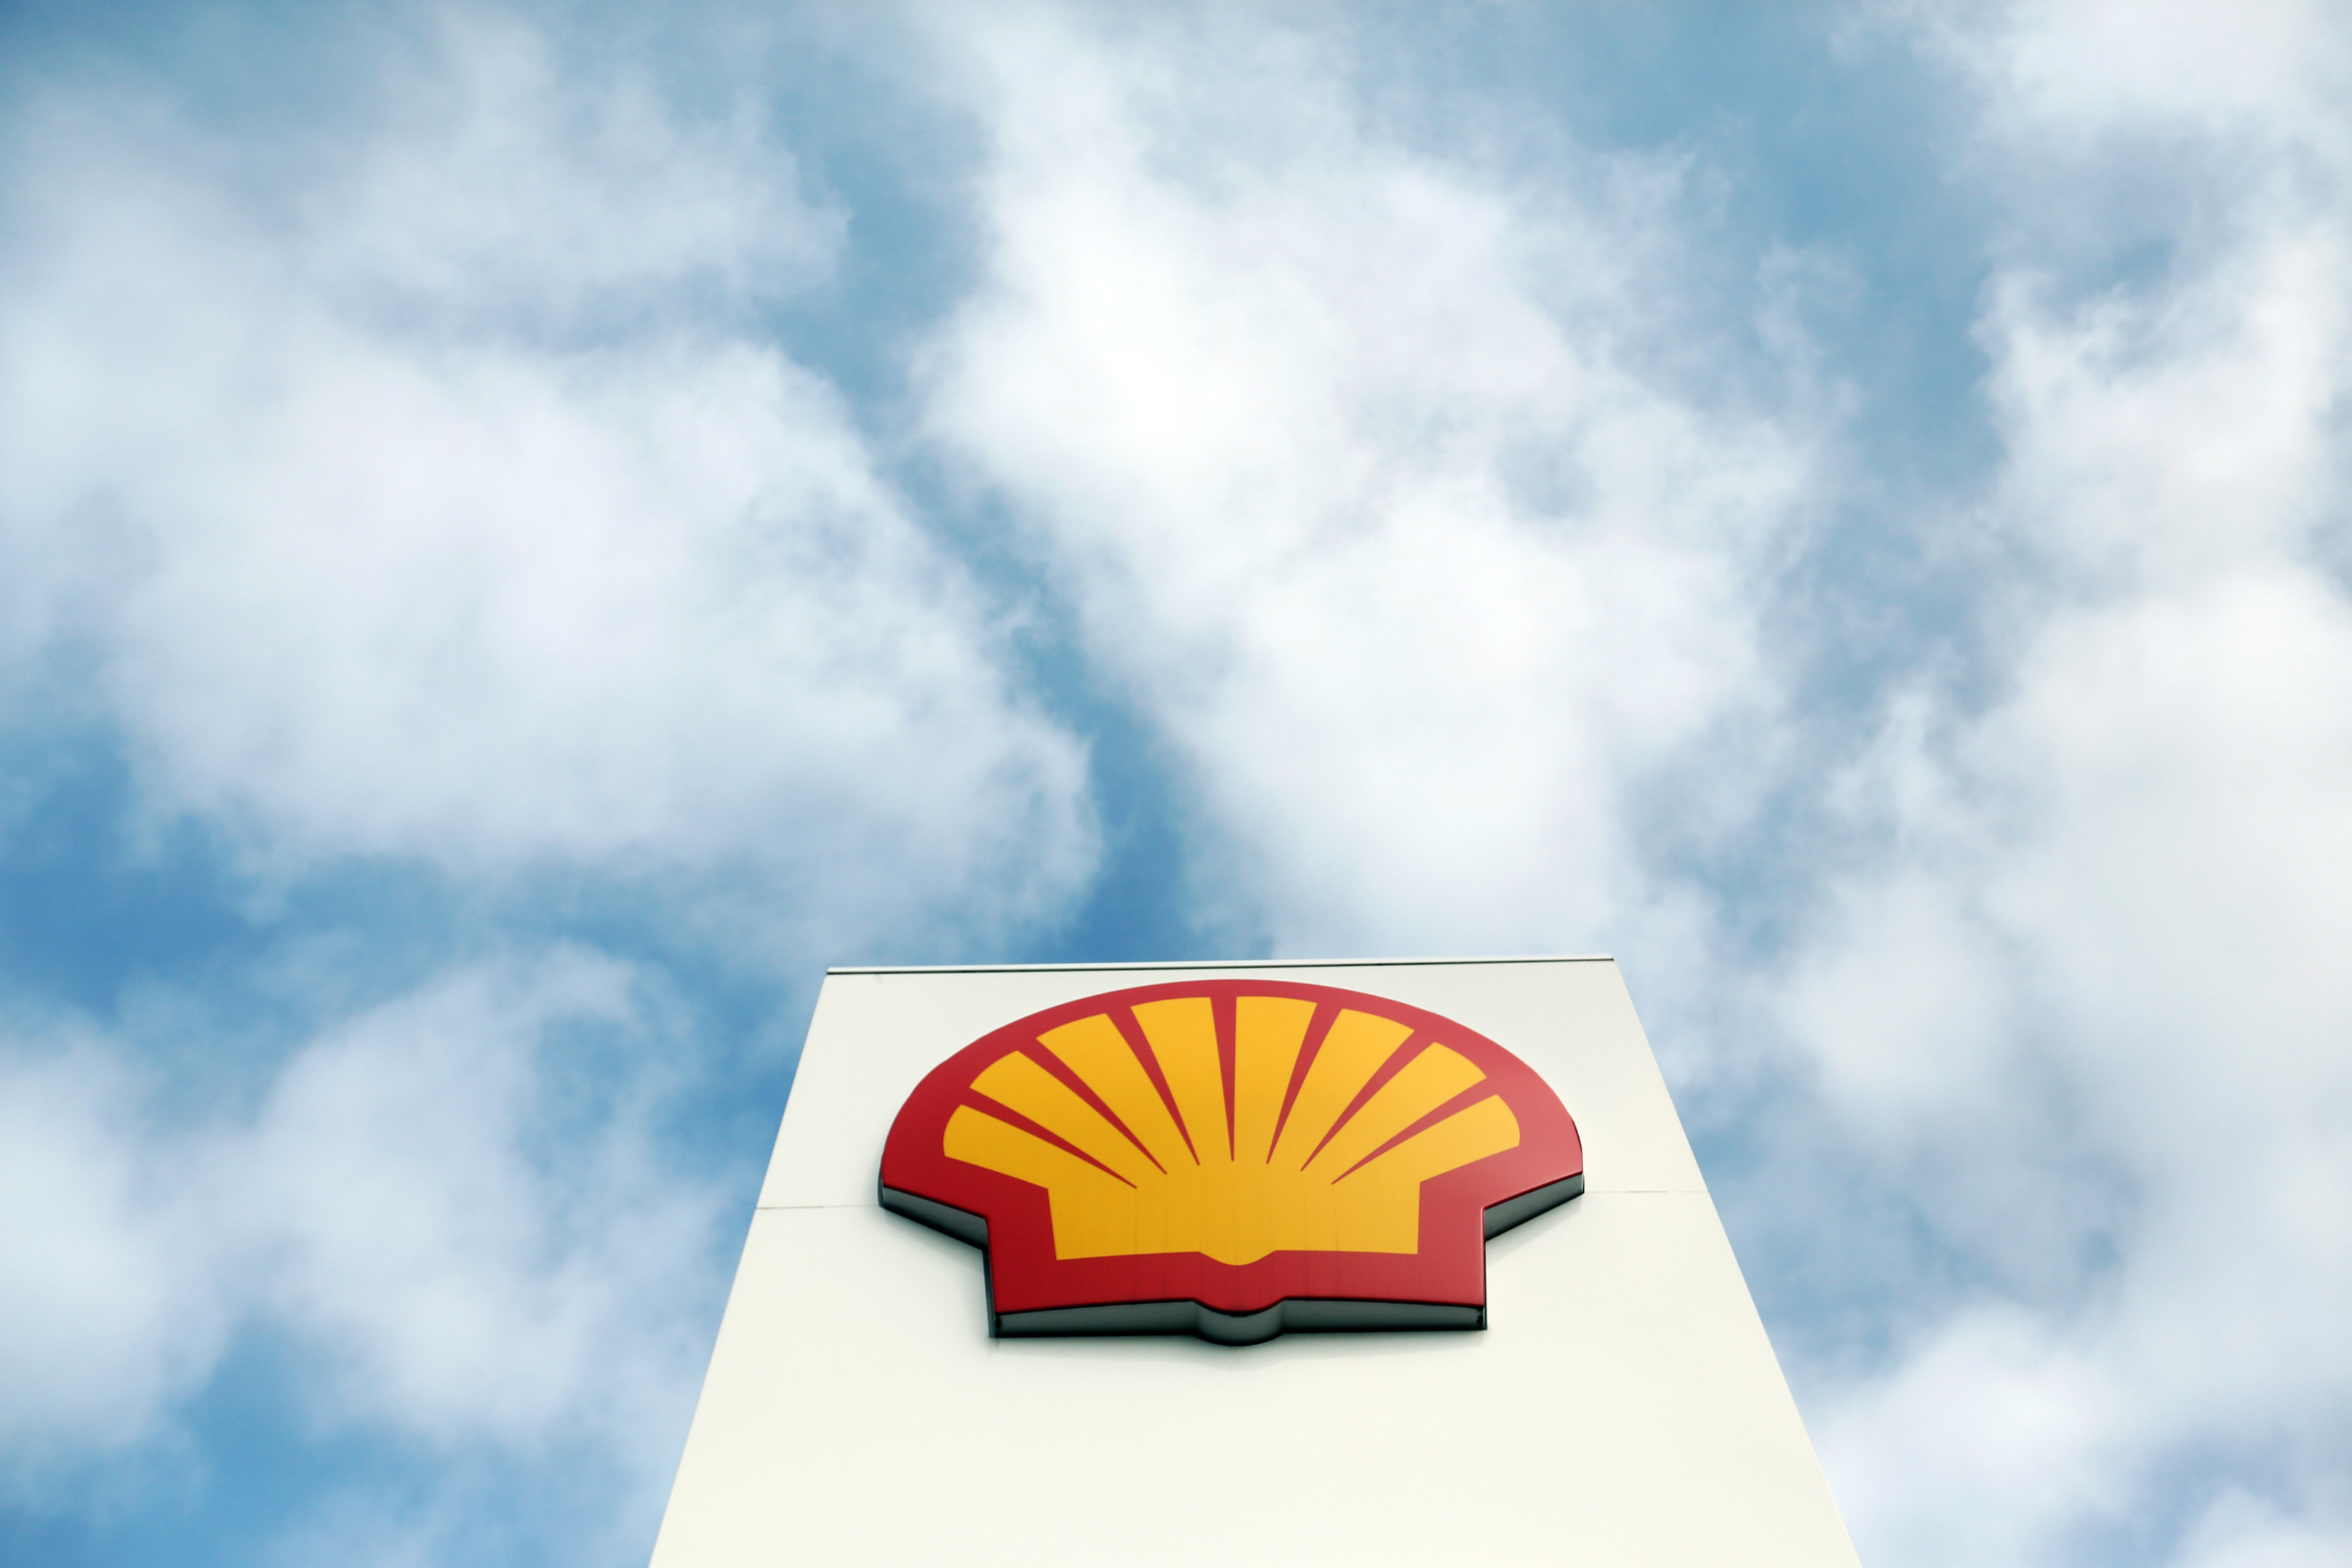 Shell logo against cloudy sky